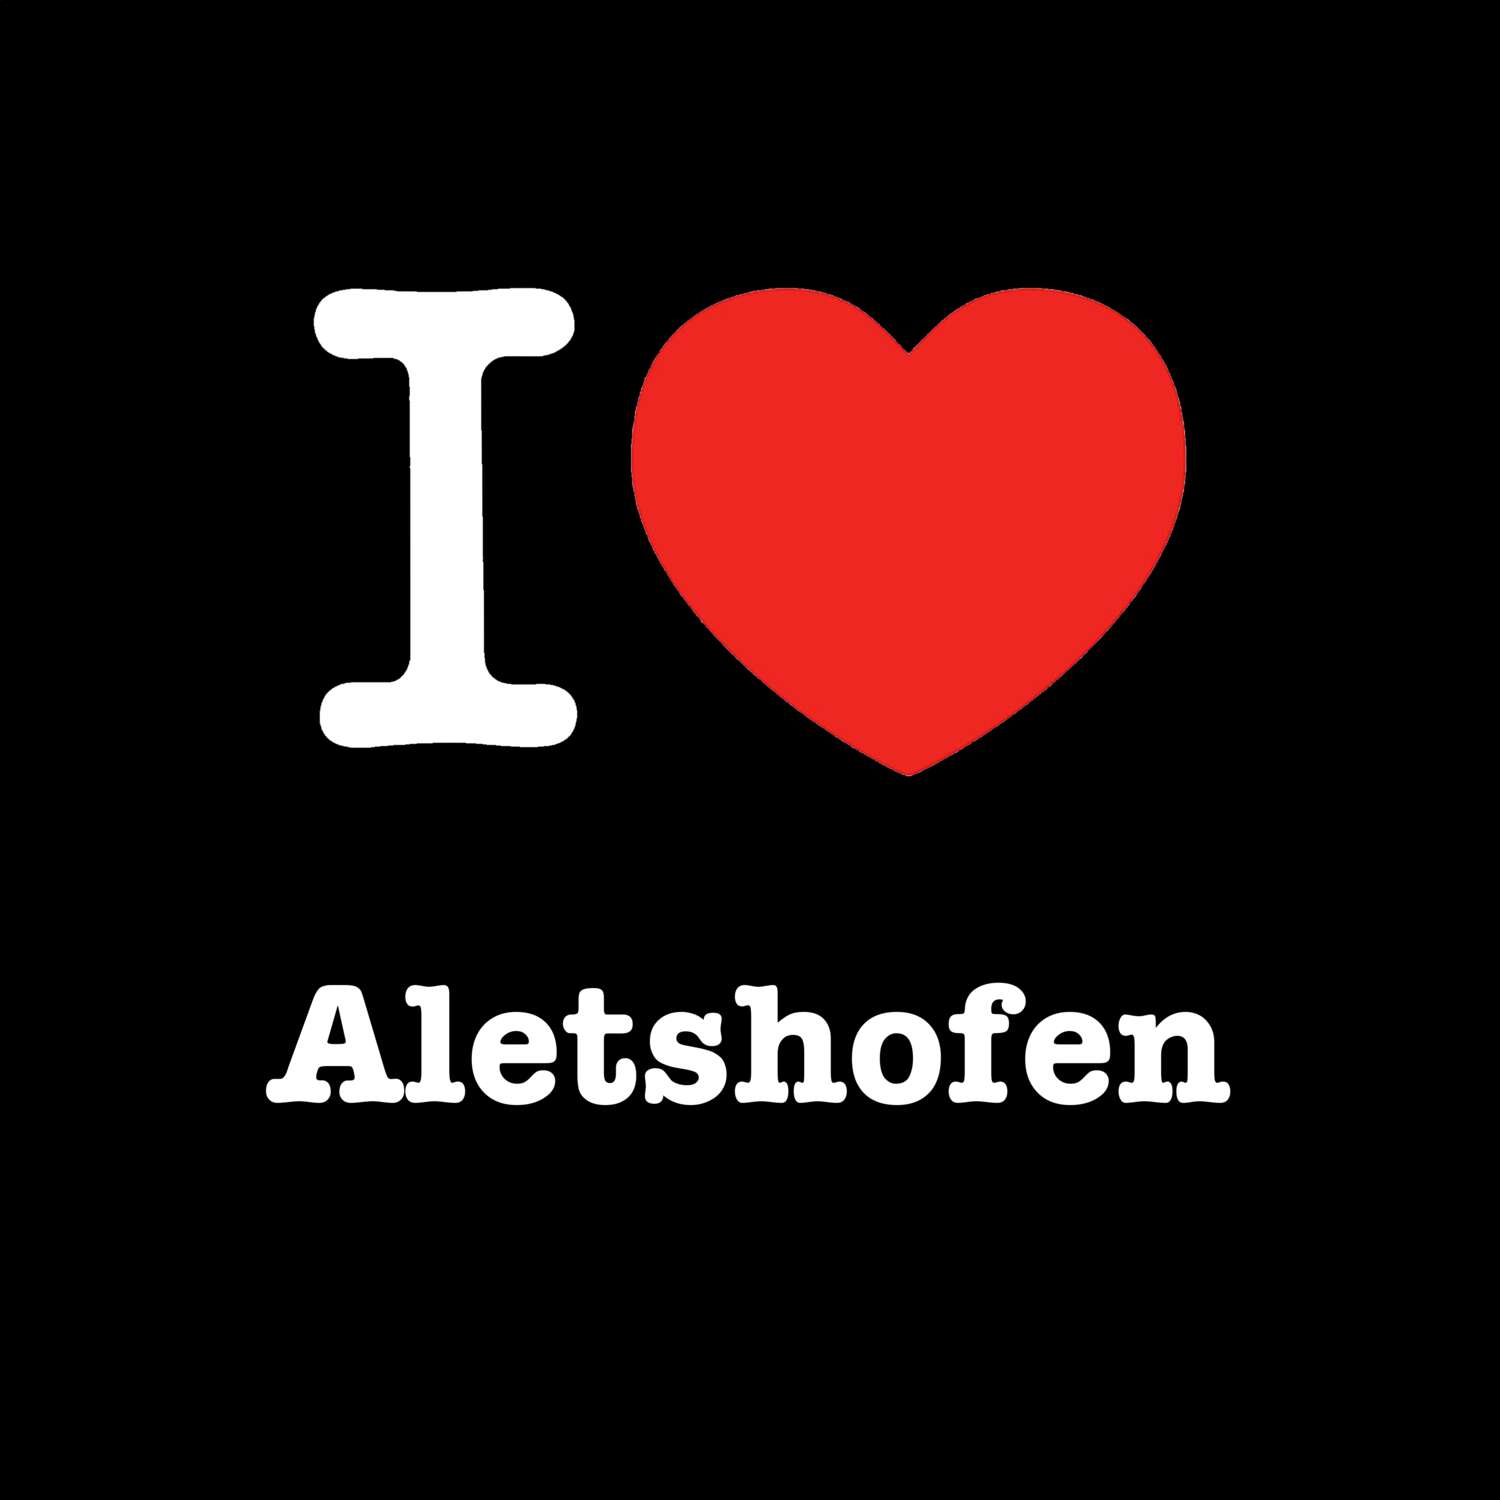 Aletshofen T-Shirt »I love«